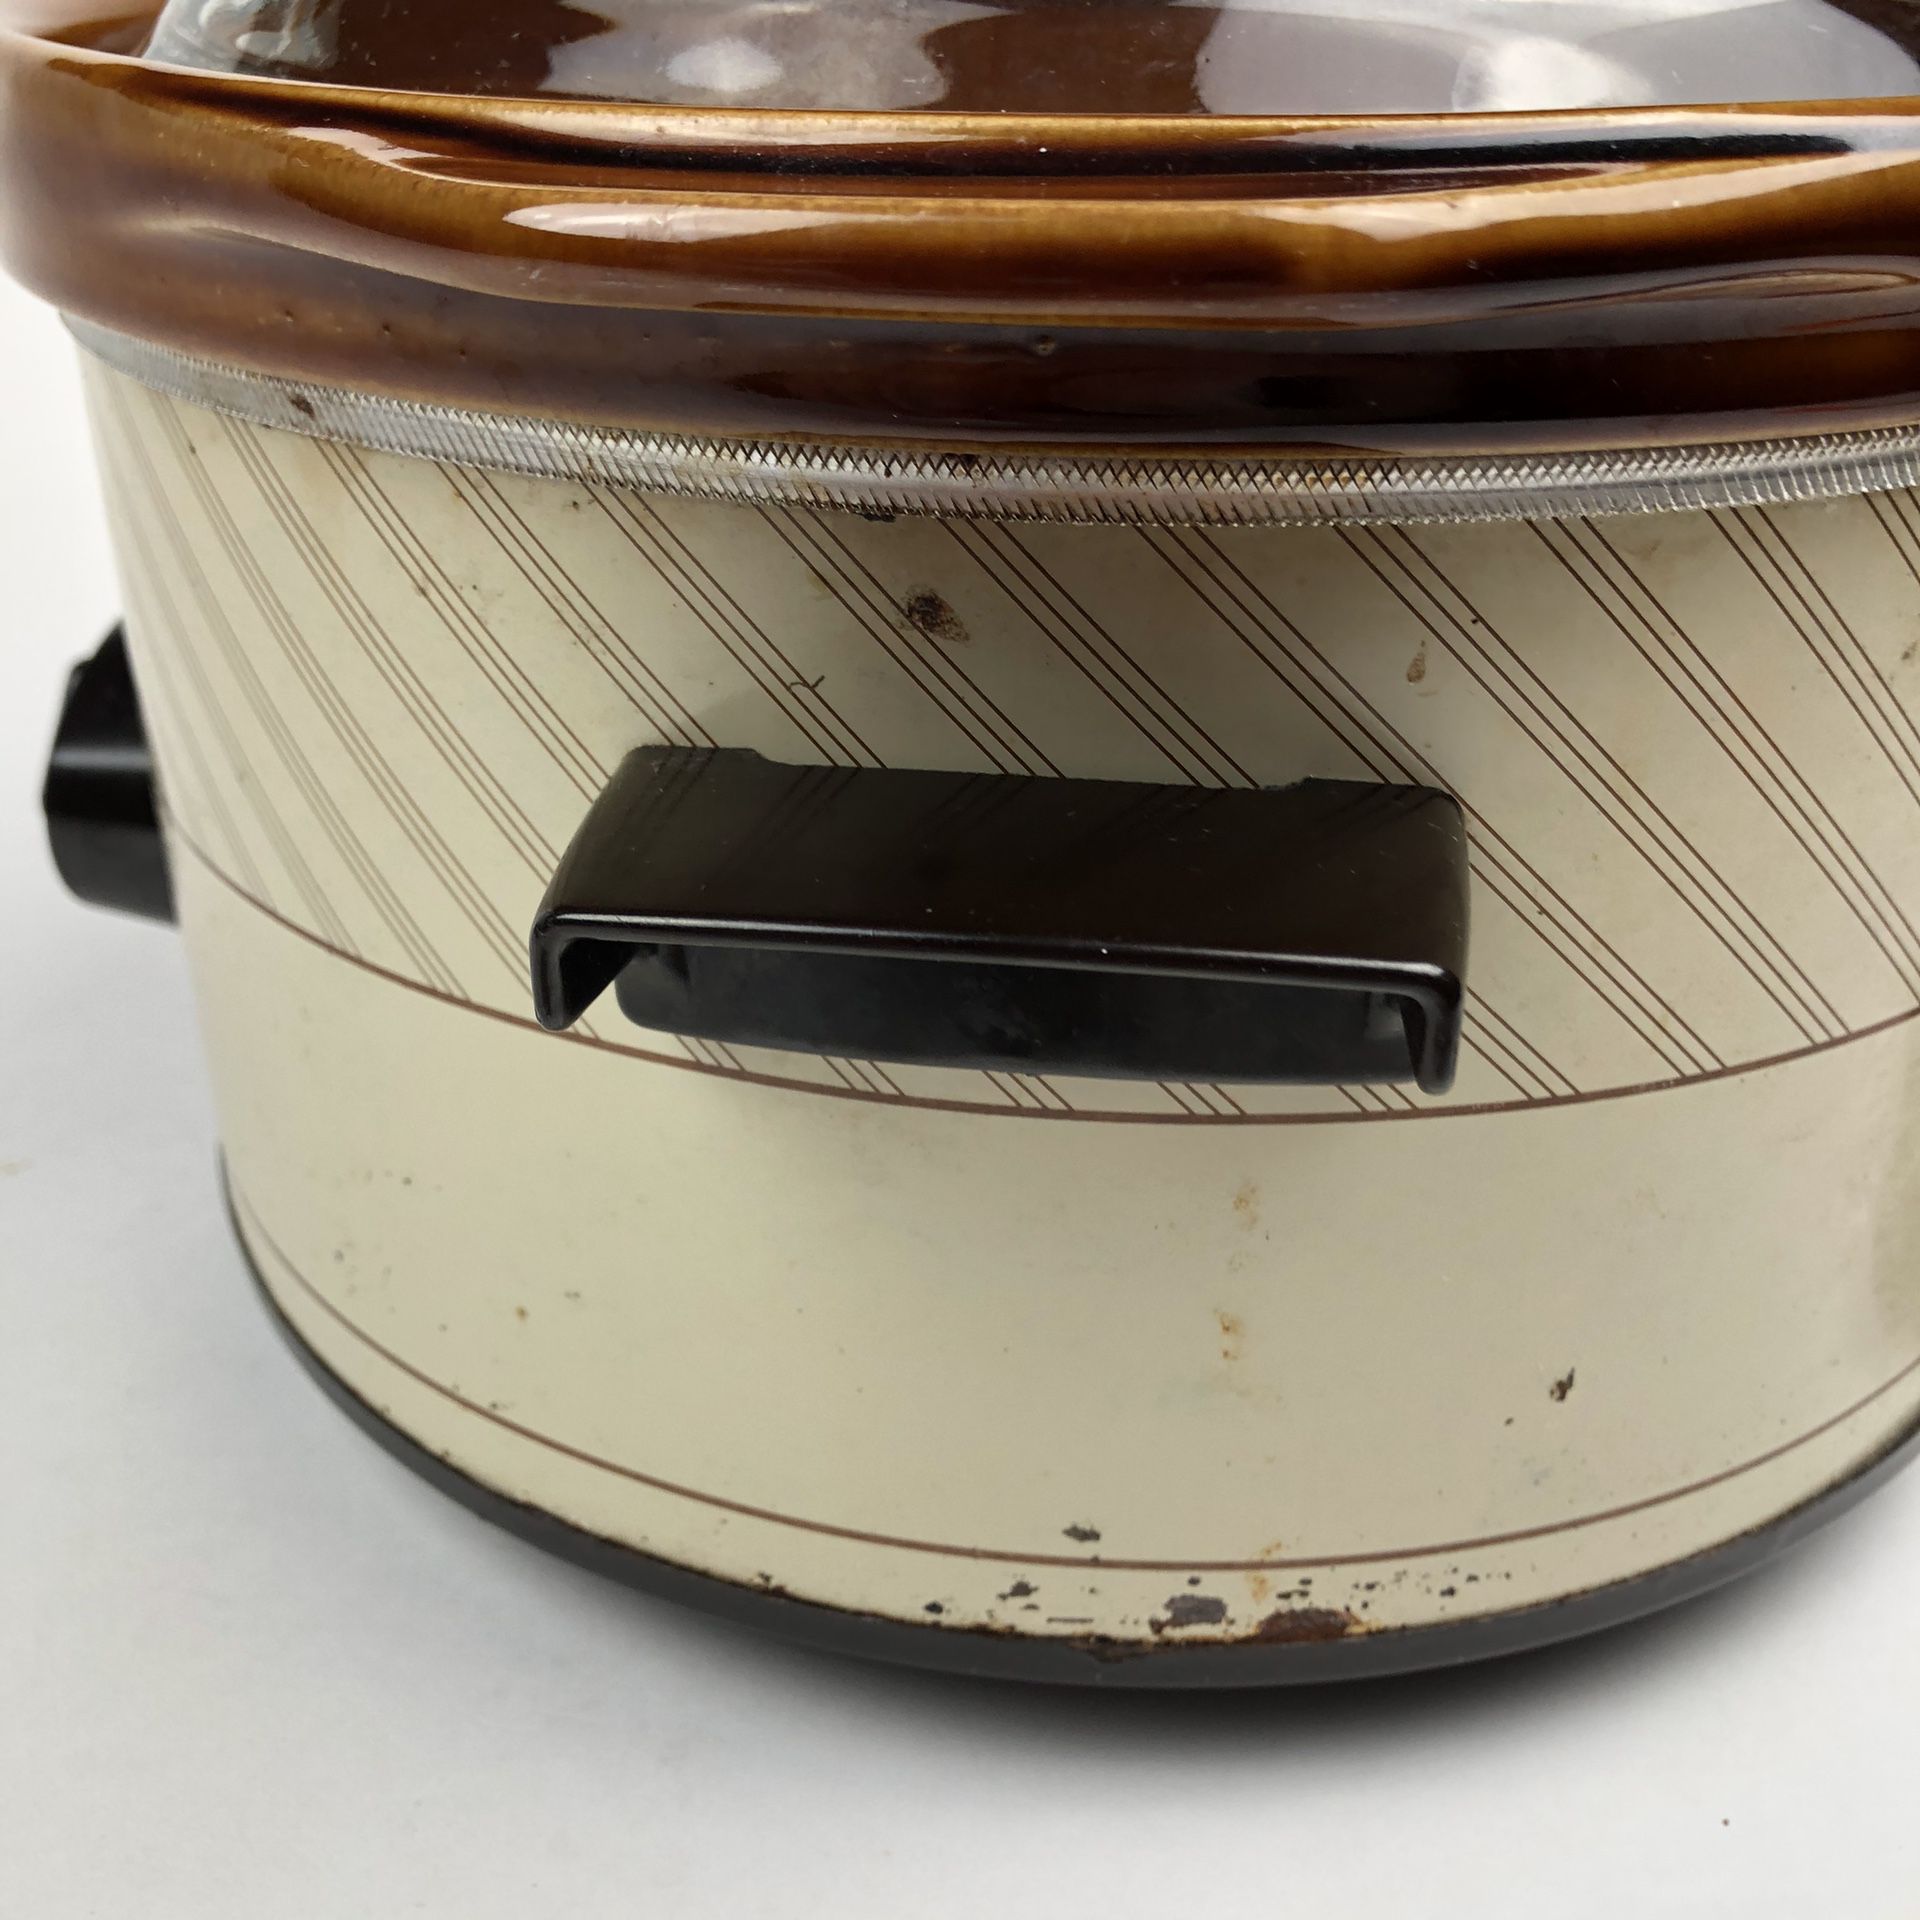 Vintage Rival 4 qt. Crock Pot Brown Stoneware Slow Cooker Model 3154/1  Glass Lid. for Sale in Westport, IN - OfferUp